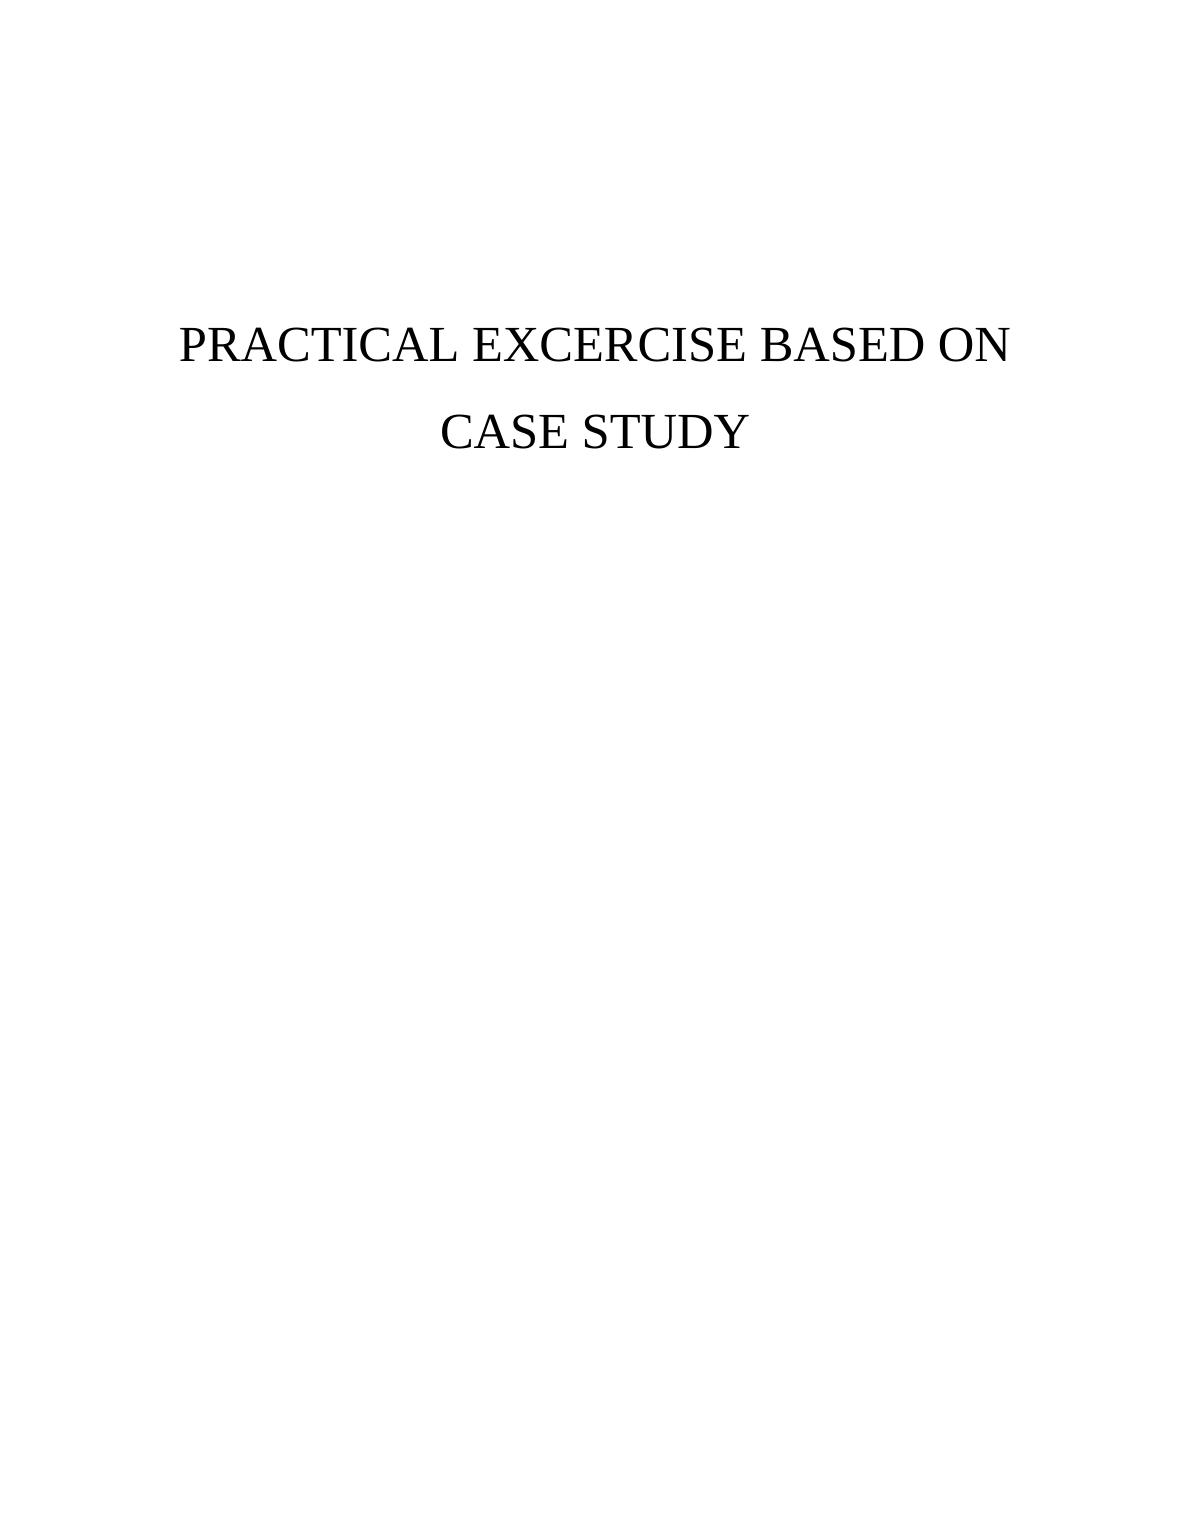 Practical Exercise Based on Case Study_1